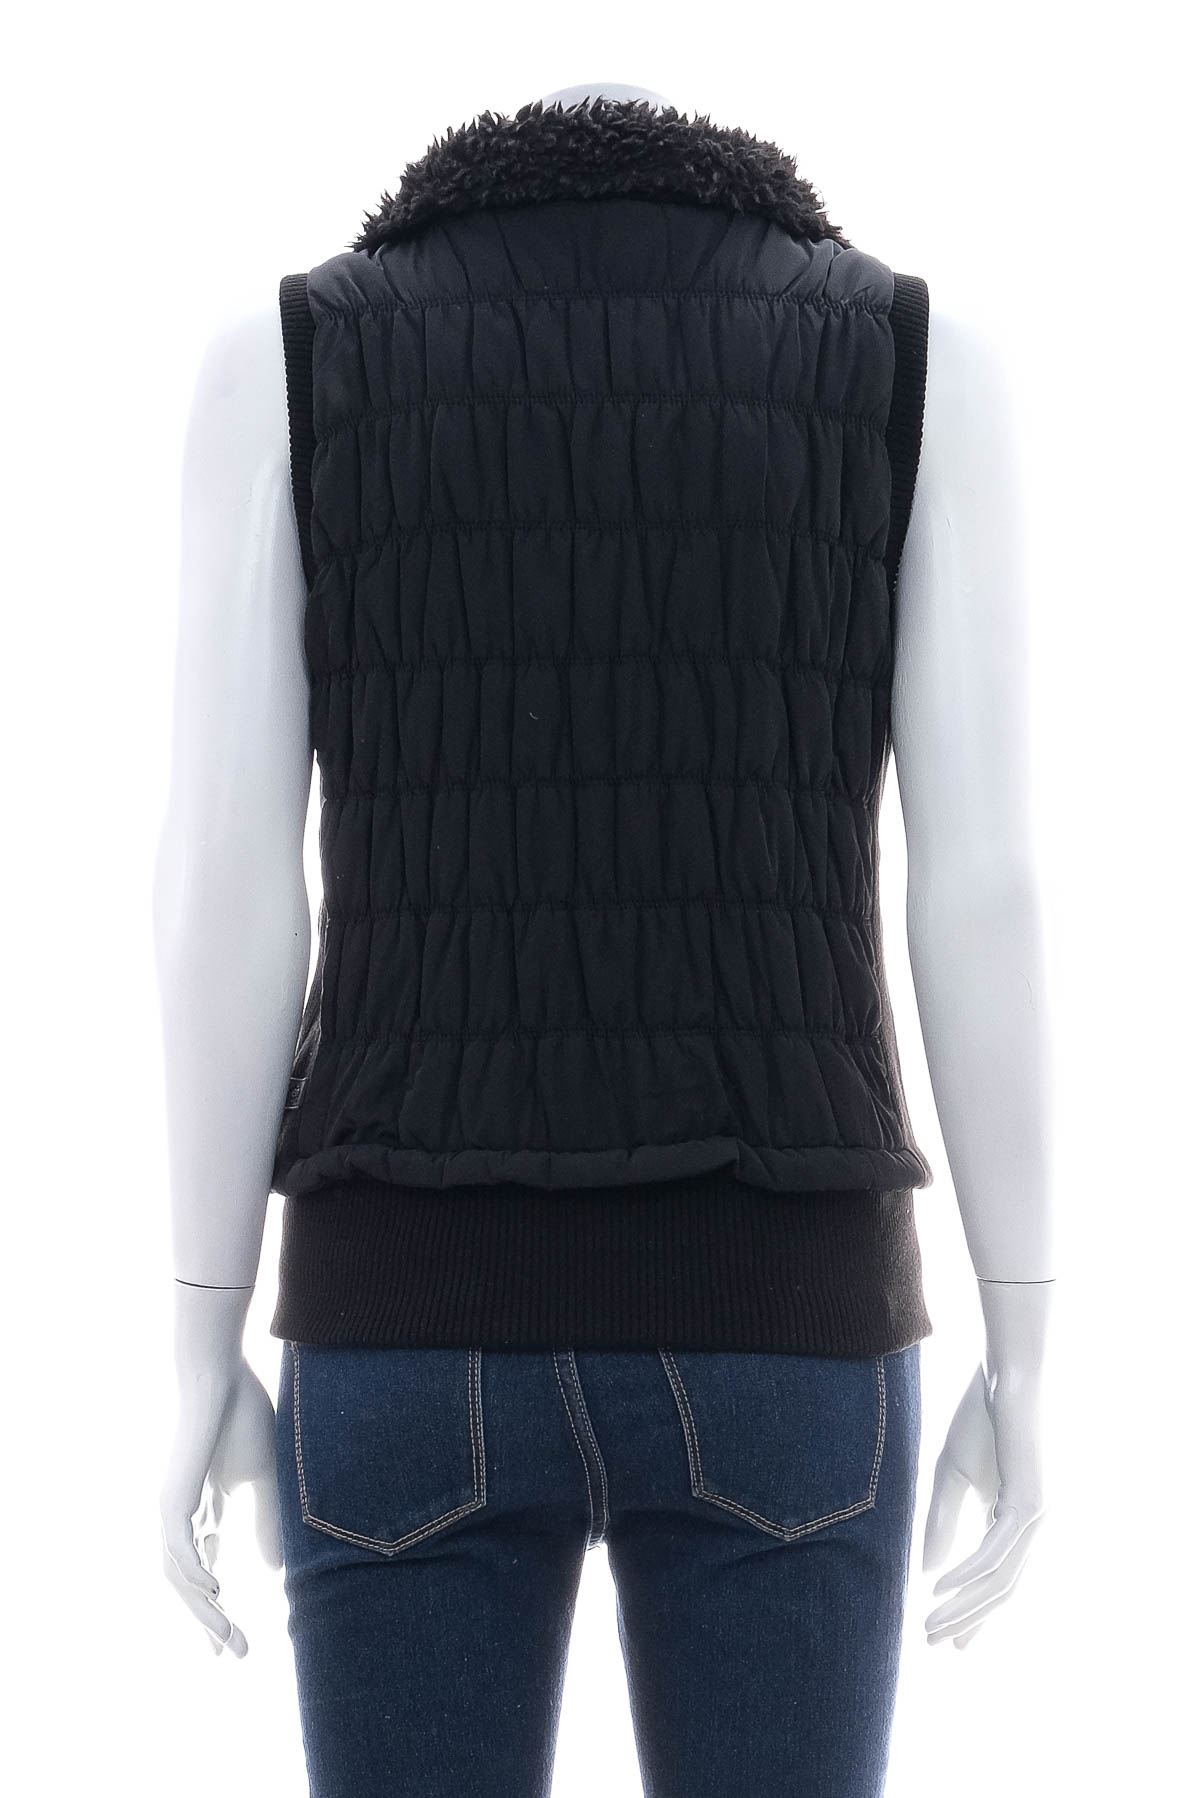 Women's vest - Calvin Klein PERFORMANCE - 1